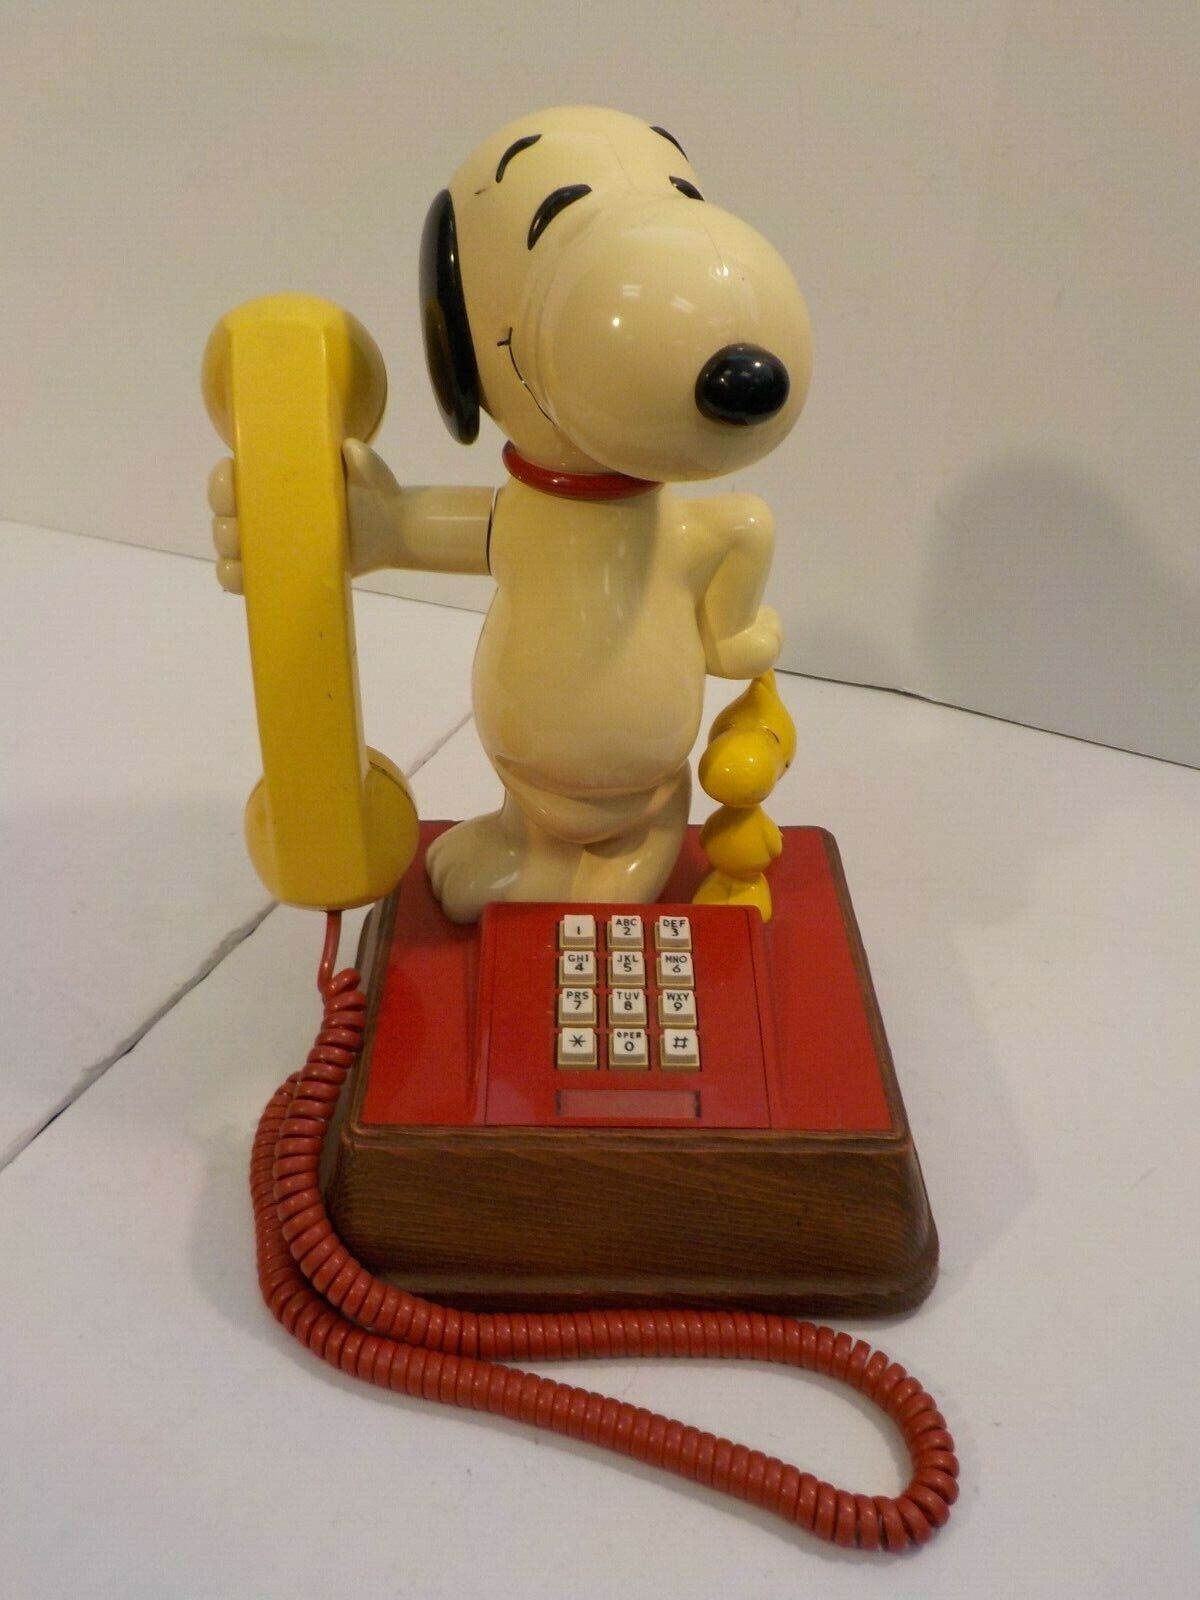 Vintage Snoopy and Woodstock Phone Model 1976